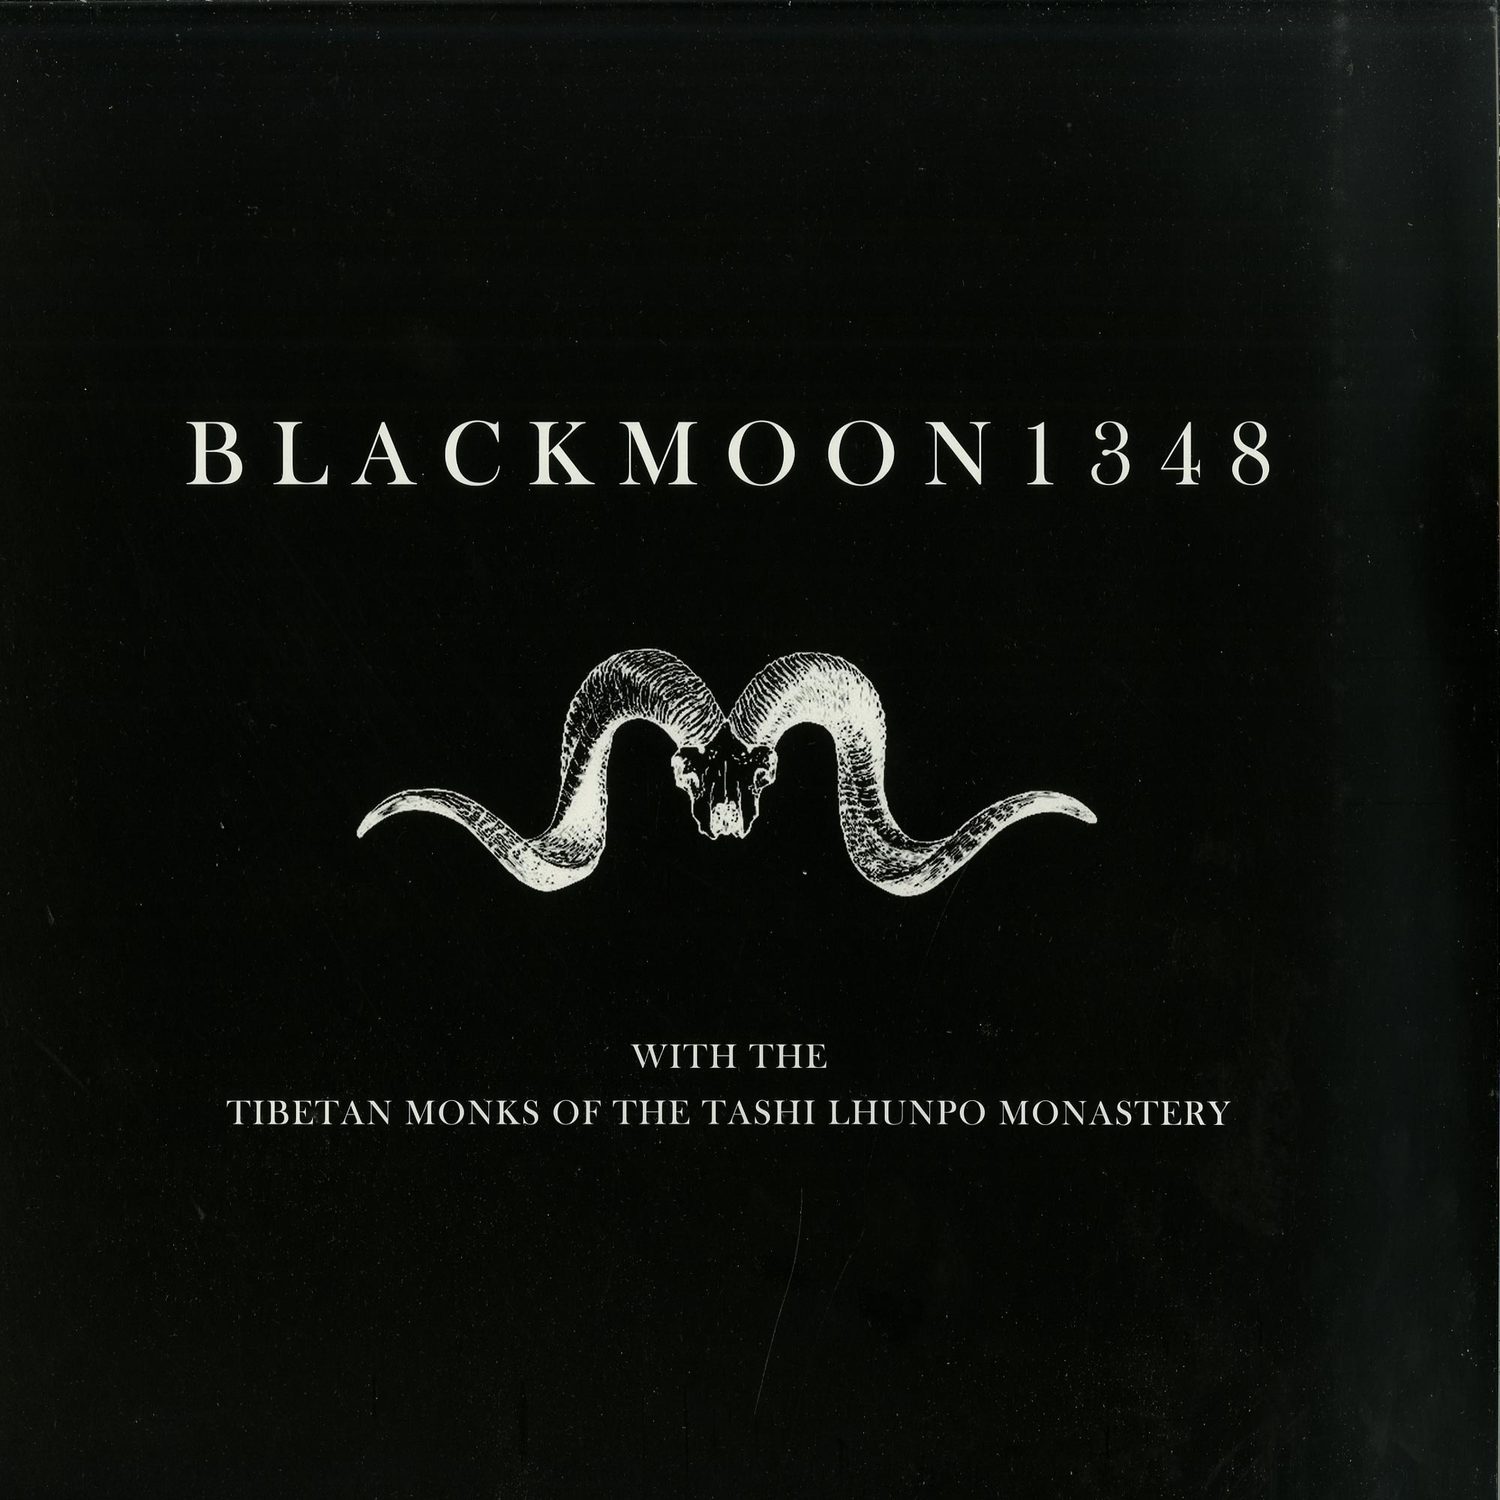 BlackMoon1348 with the Tashi Lhunpo Monks - DEATH006 